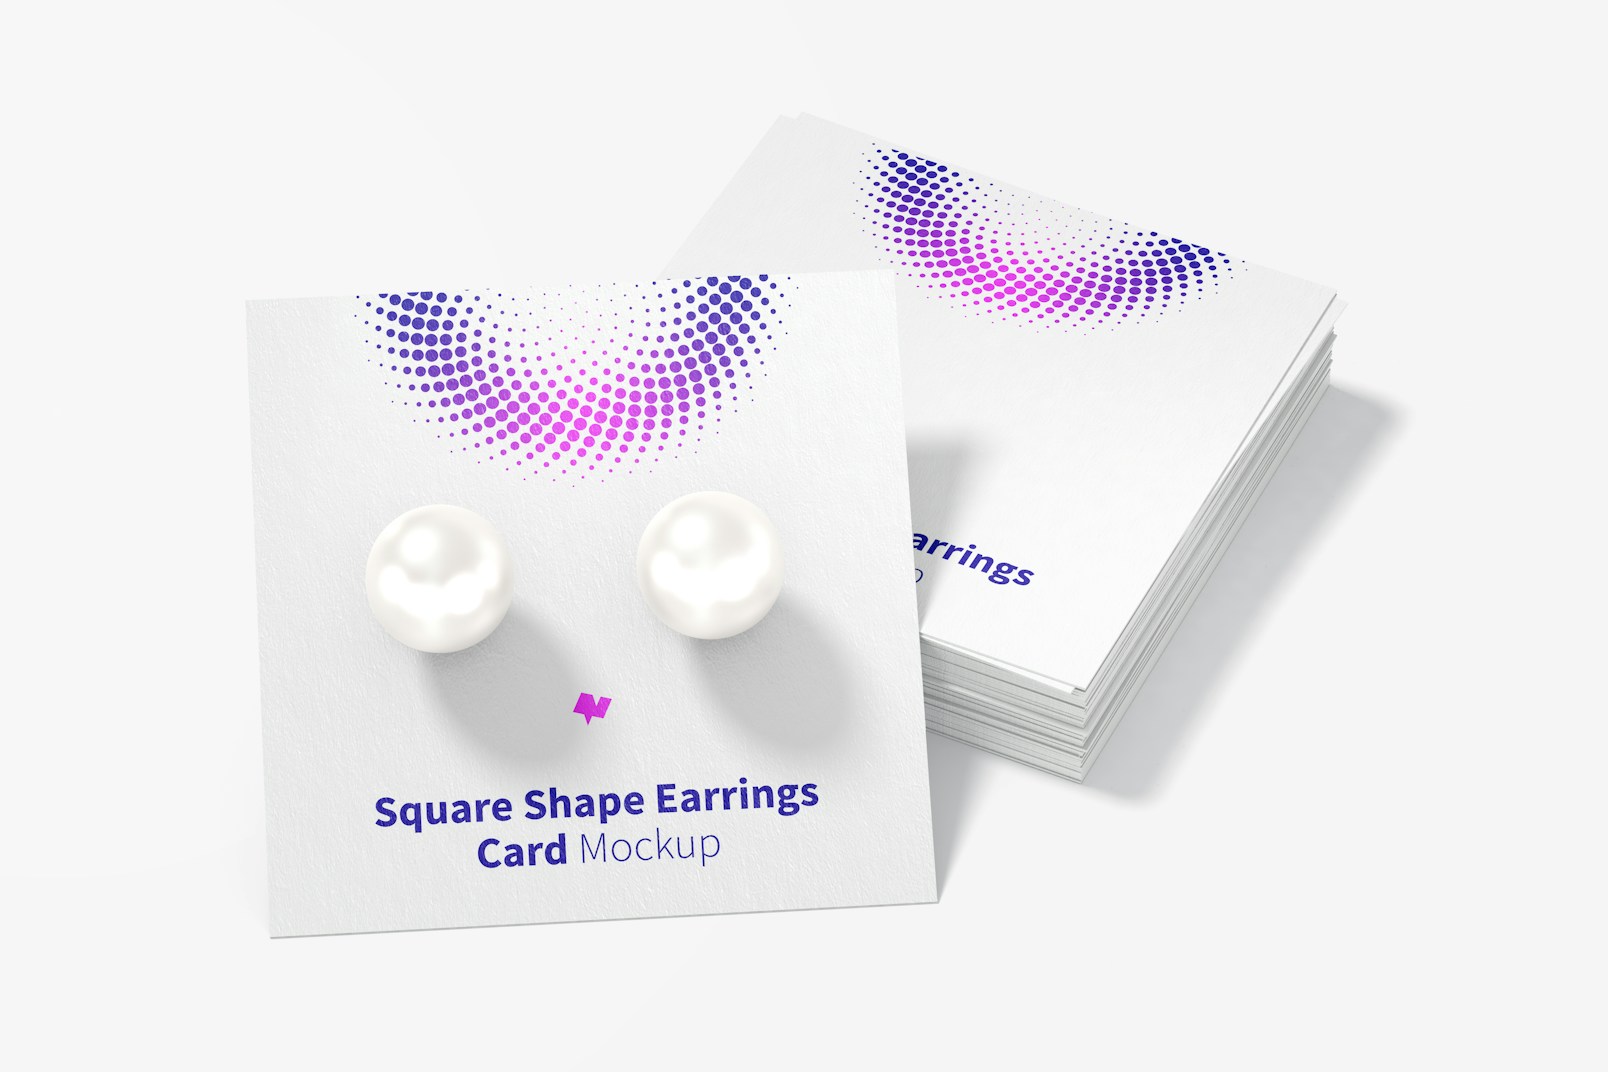 Square Shape Earrings Card Mockup, Stacked Set